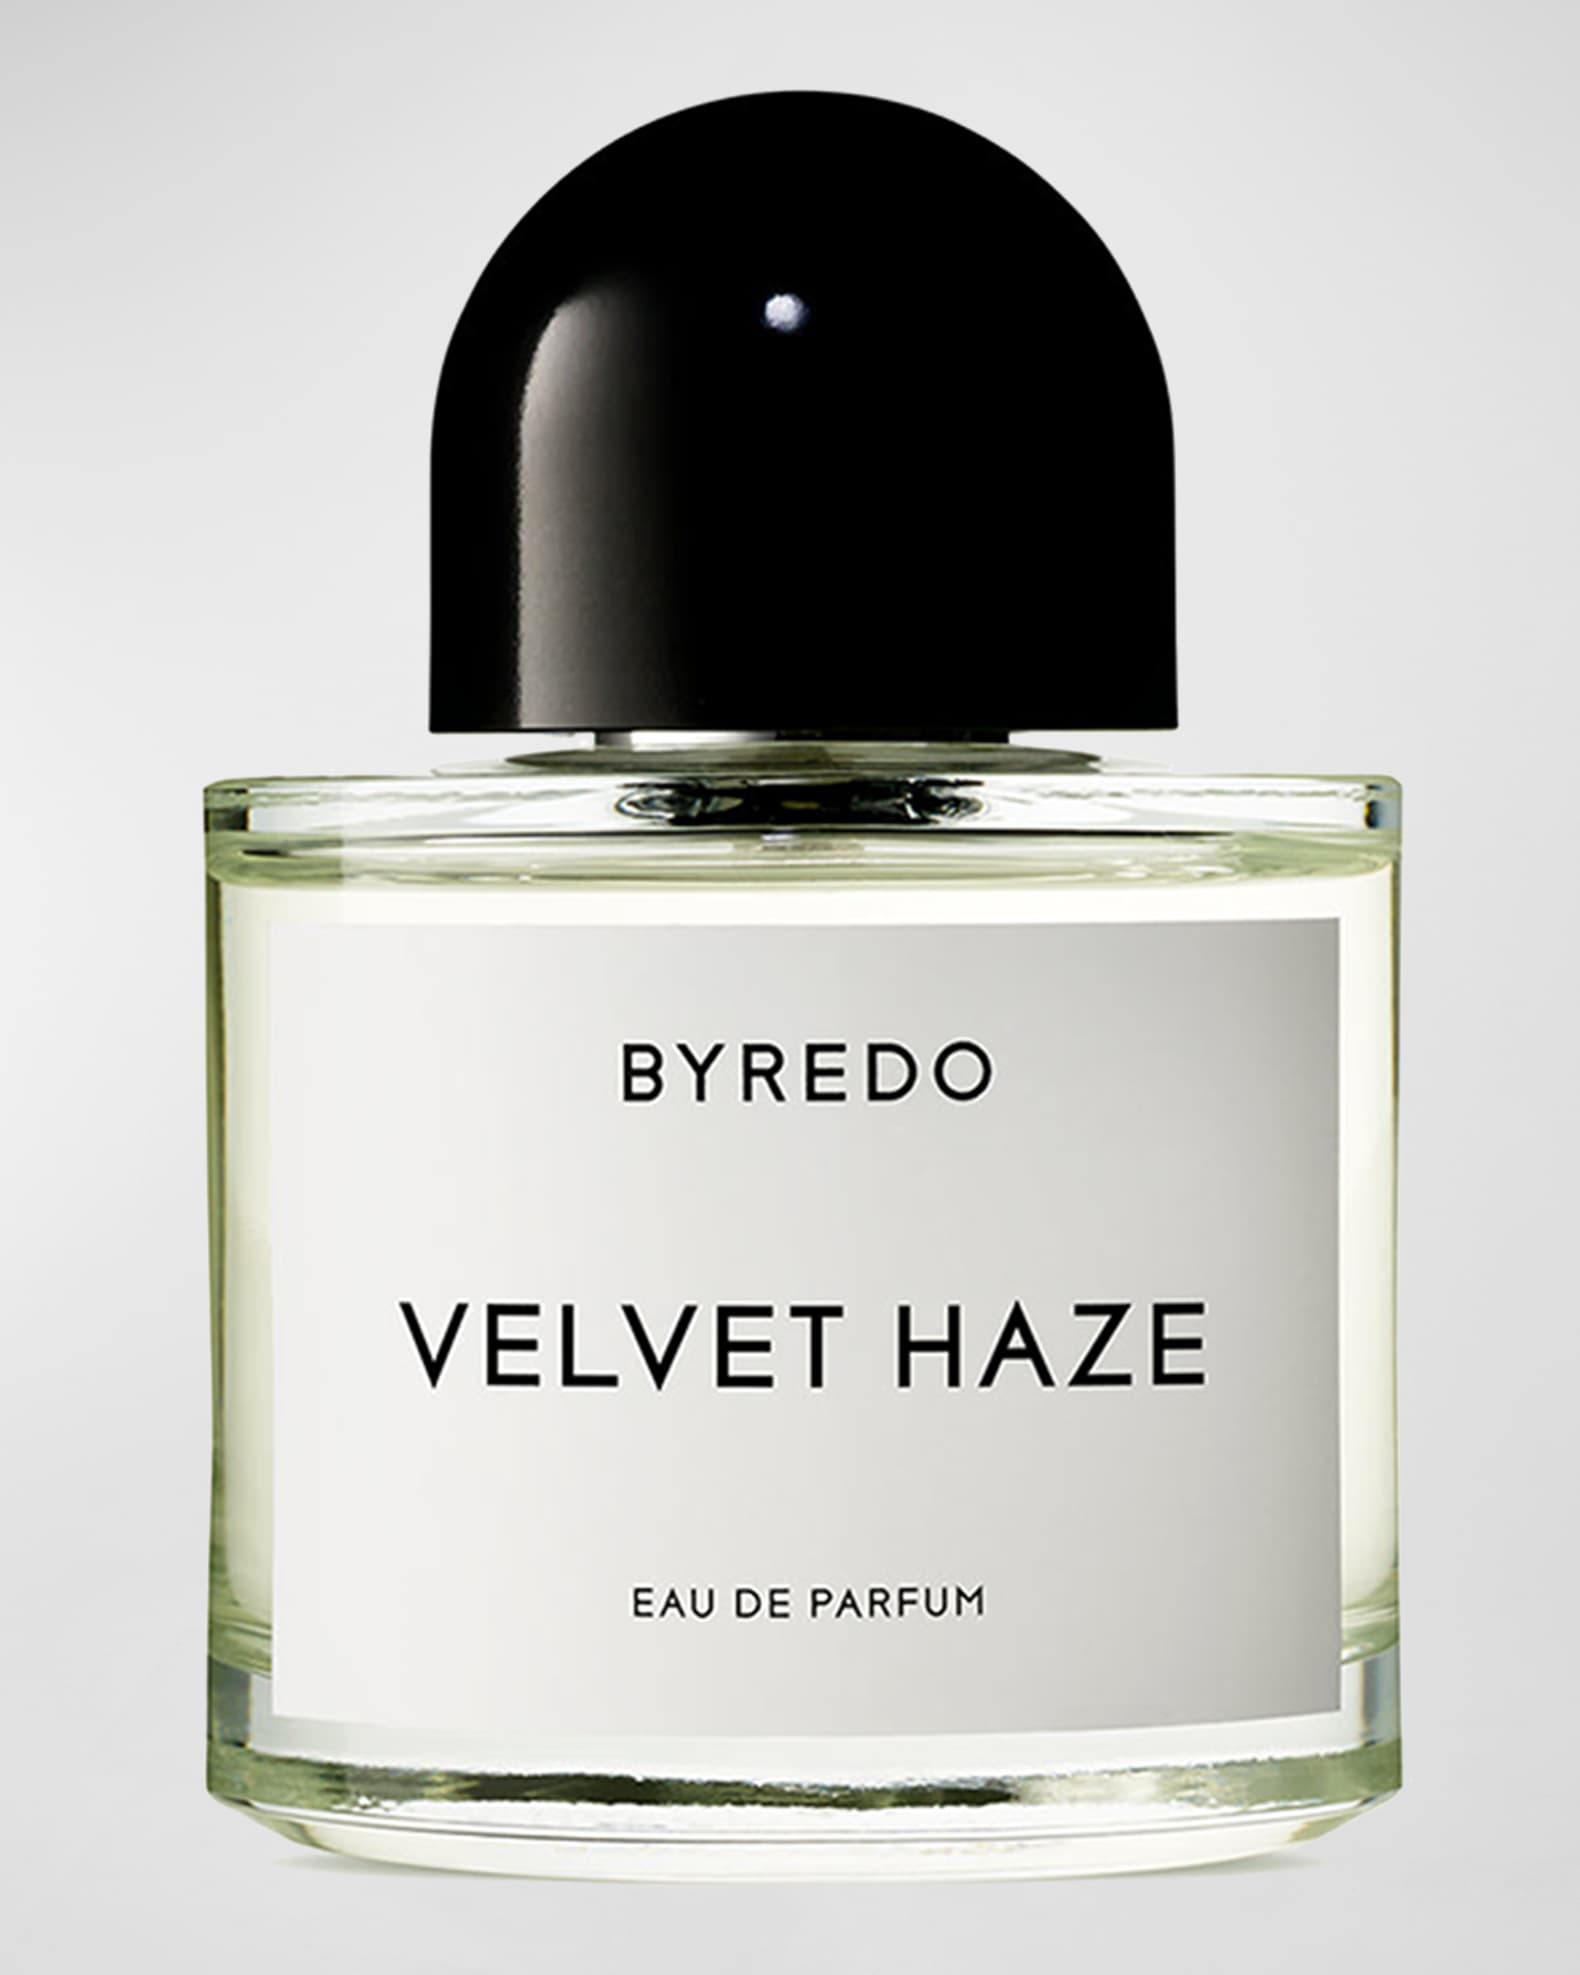 Væk karakterisere orkester Byredo Velvet Haze Eau de Parfum, 3.4 oz. | Neiman Marcus